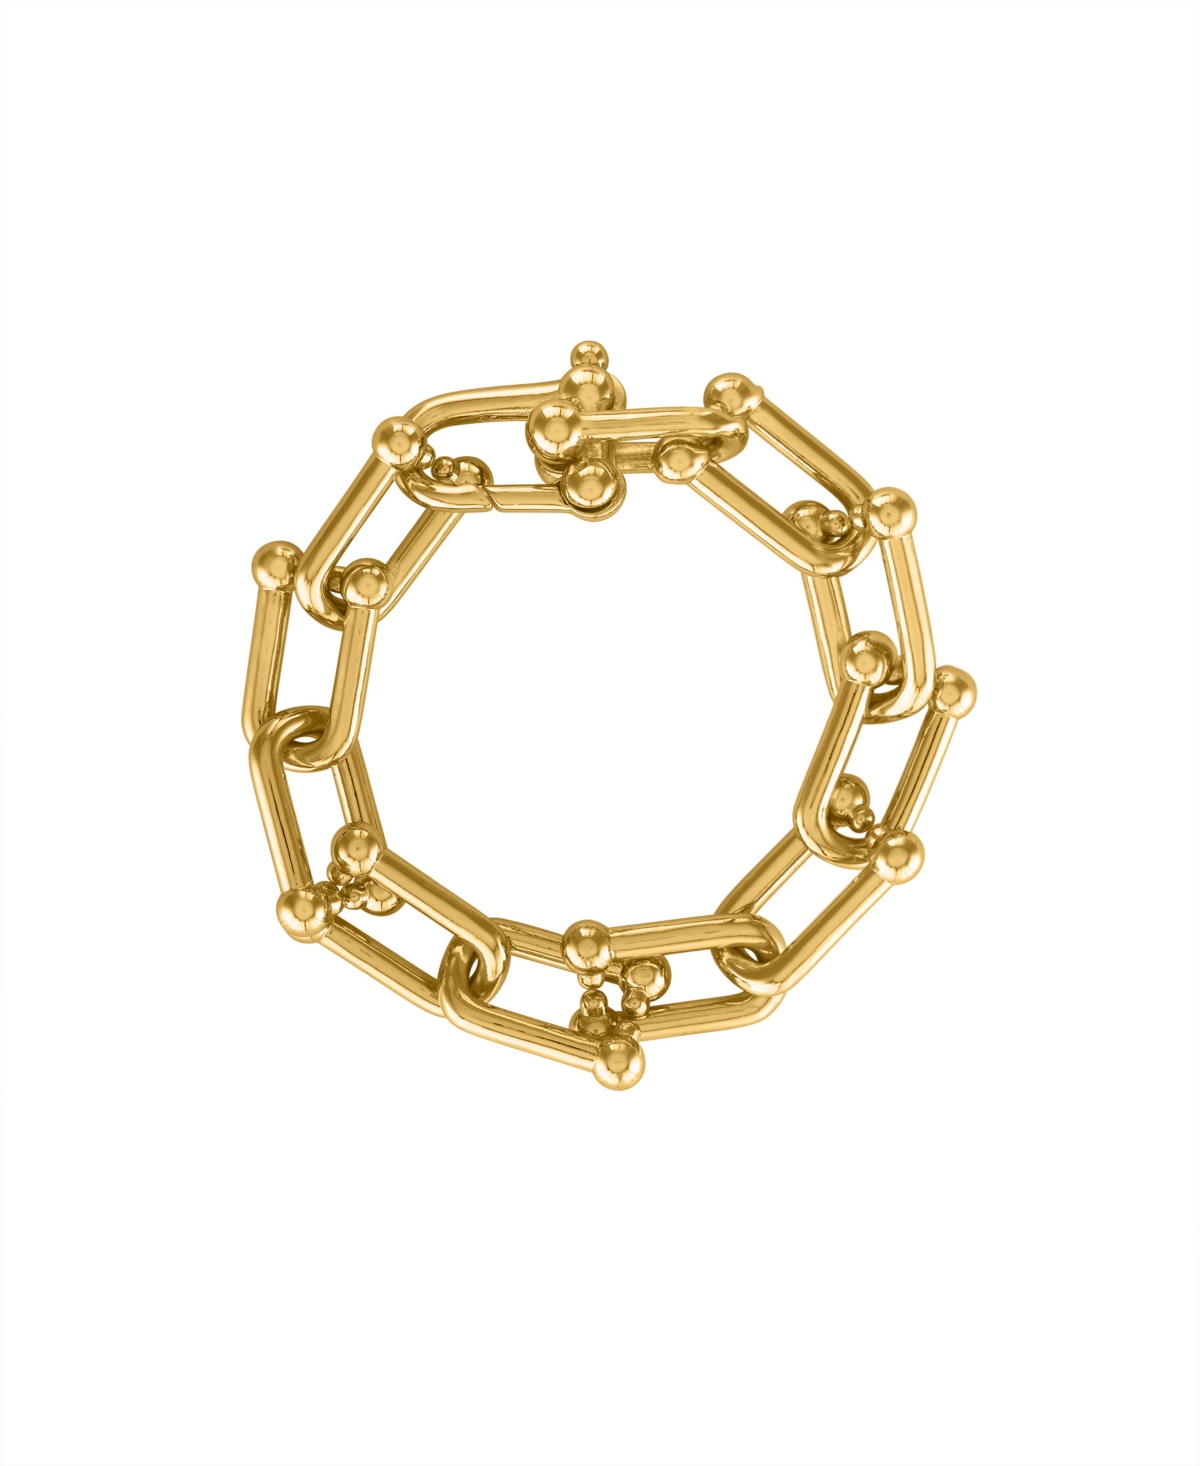 Kosi Bracelet in 18K Gold-Plated Brass - Gold